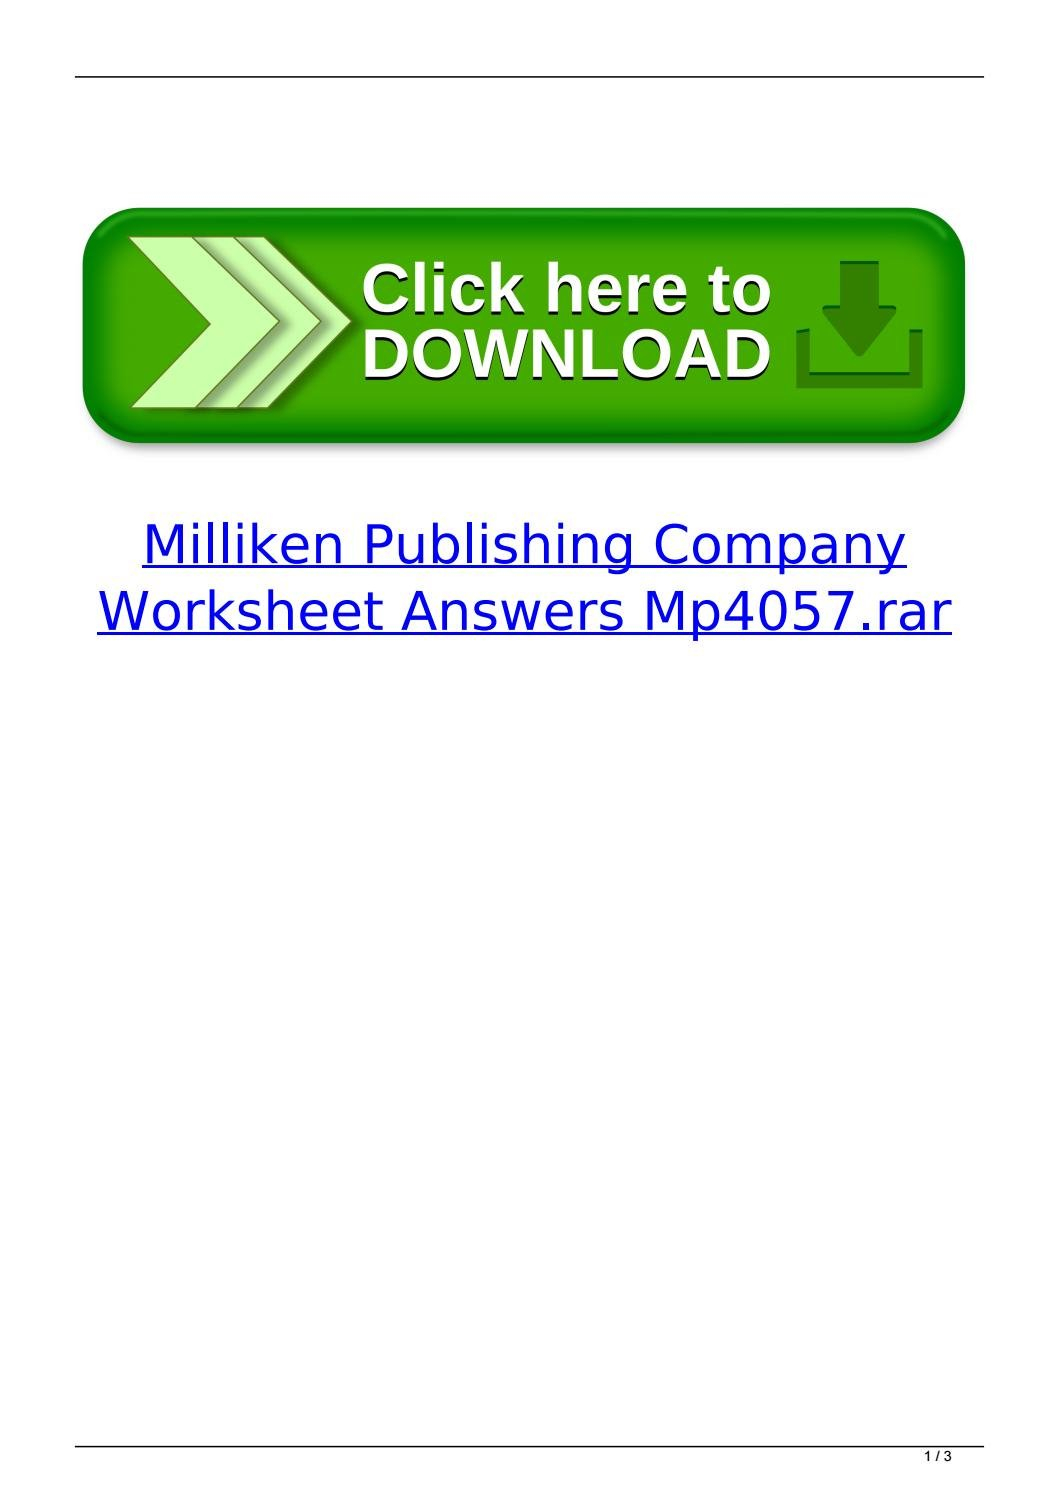 Milliken Publishing Company Worksheet Answers Mp4057Rar Along With Milliken Publishing Company Worksheet Answers Mp4057